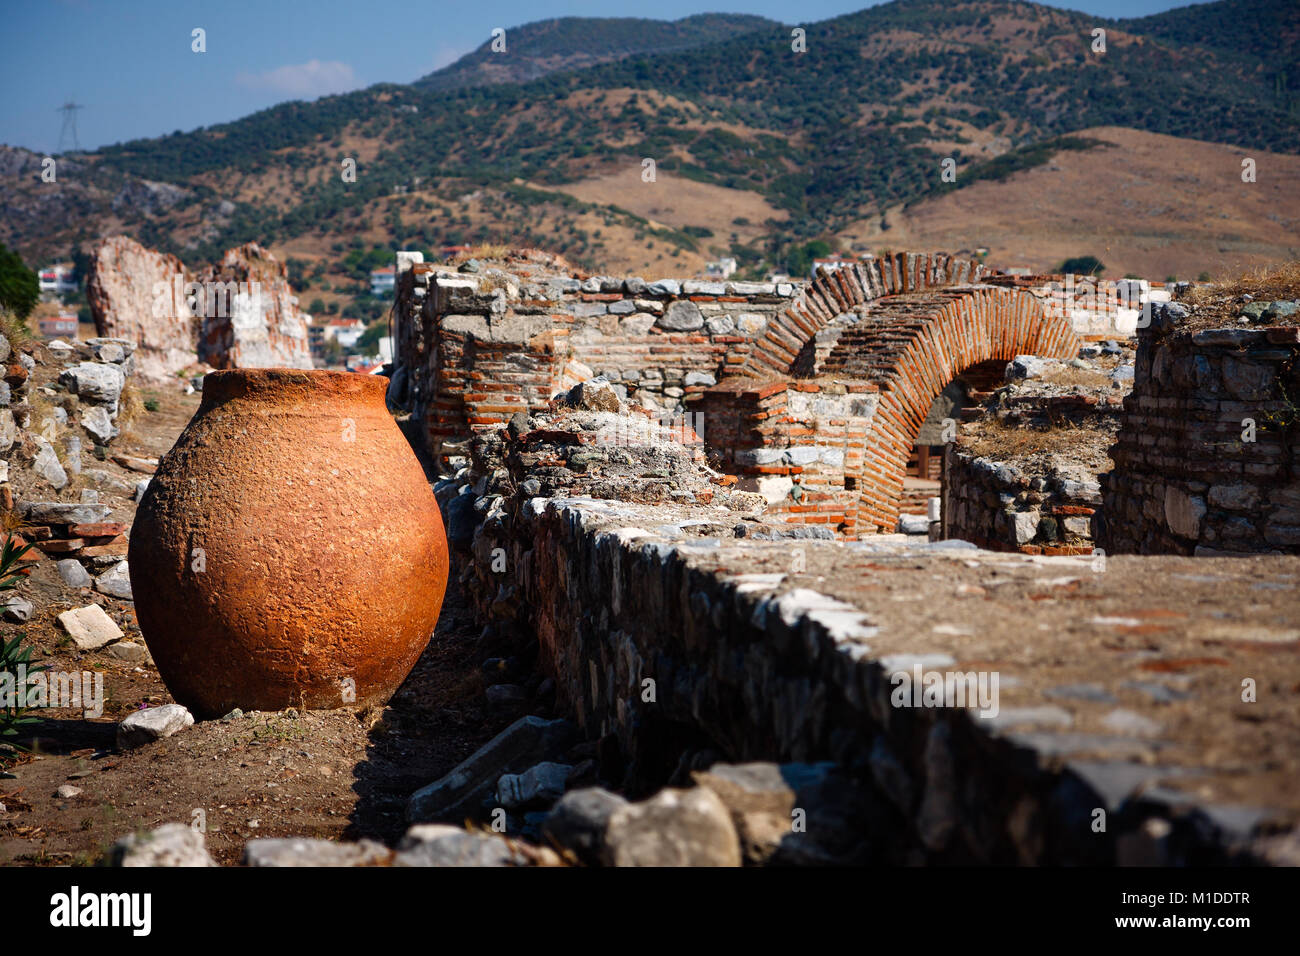 Ruins of the Basilica of St. John the Apostle in Selcuk / Ephesus. Turkey Stock Photo